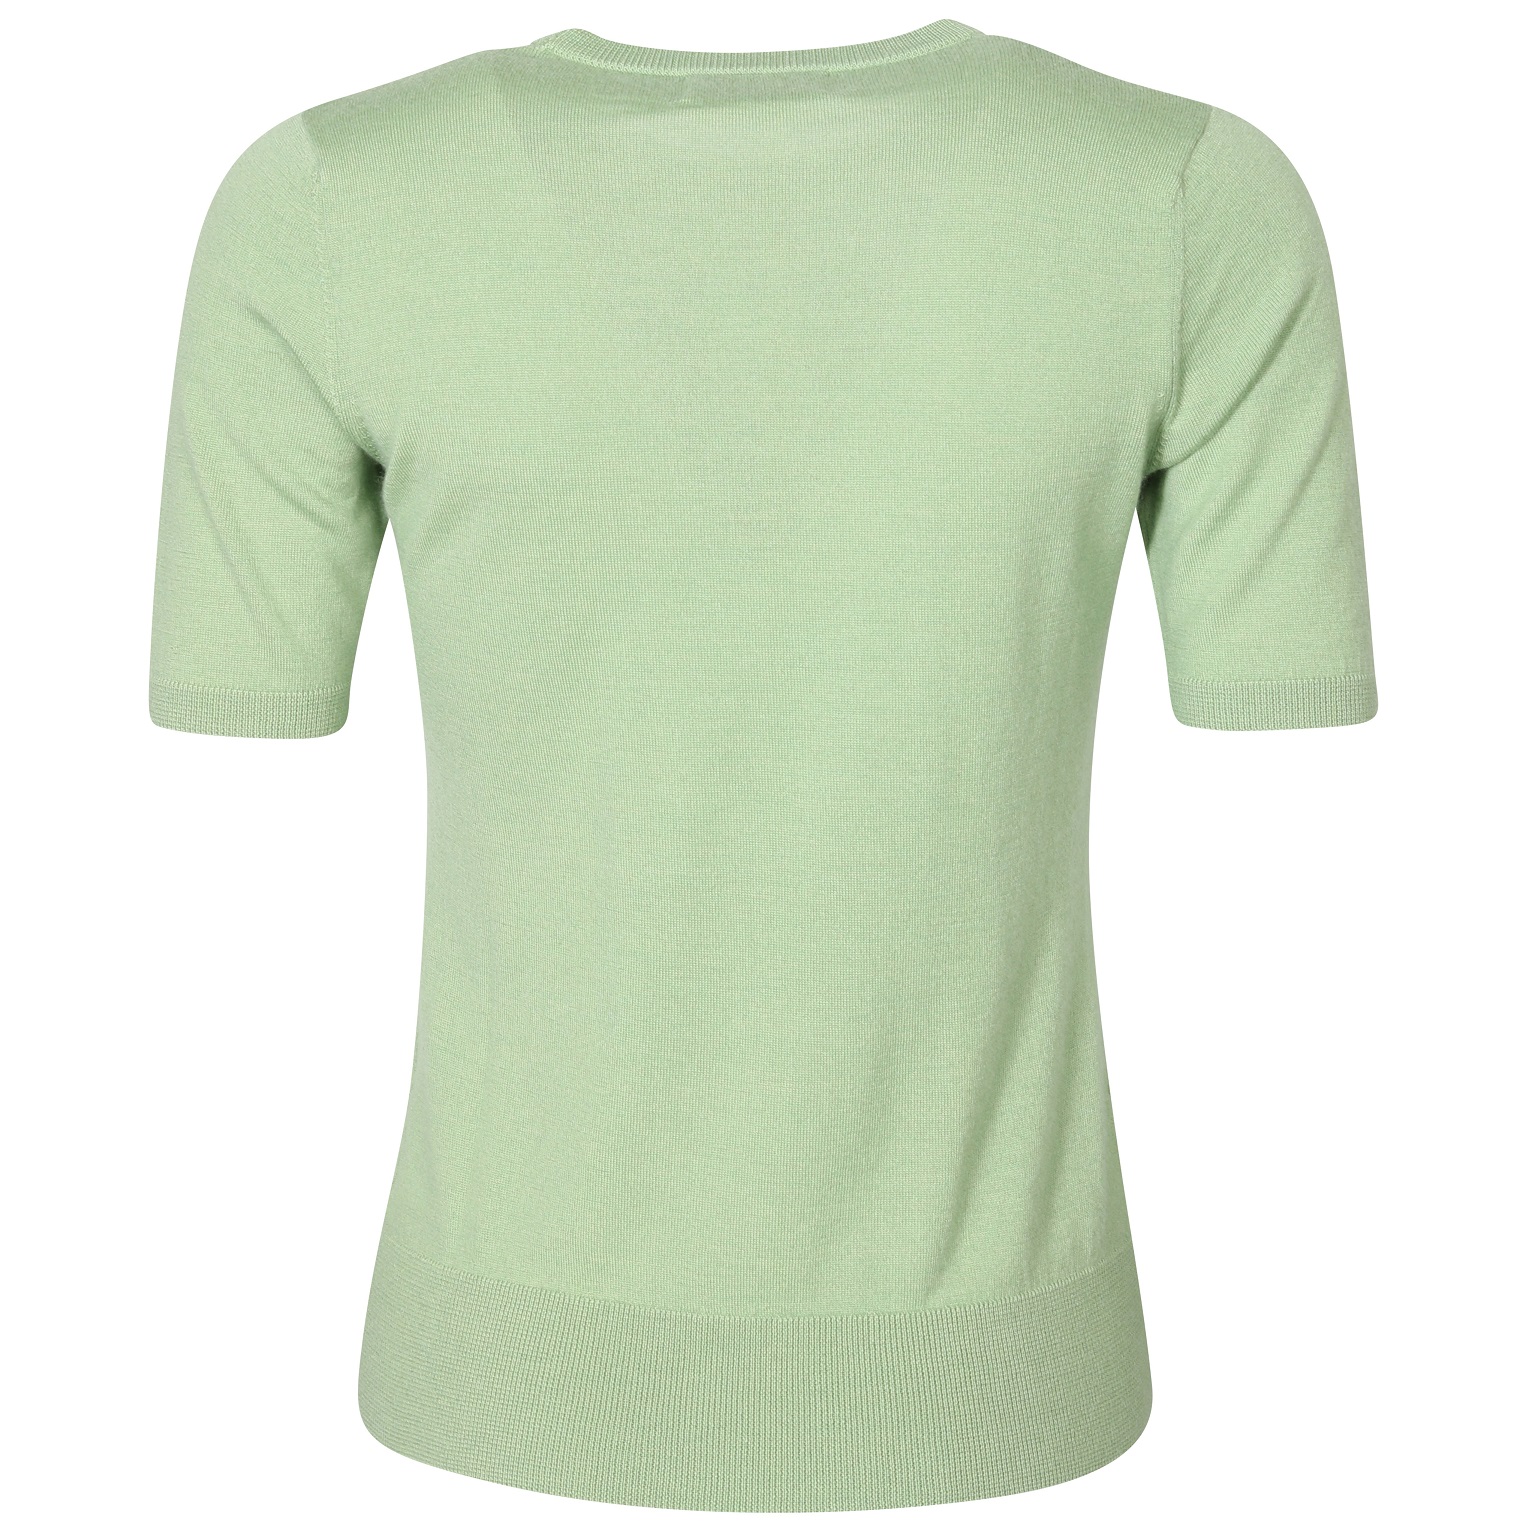 FLONA Cashmere T-Shirt in Light Green XS